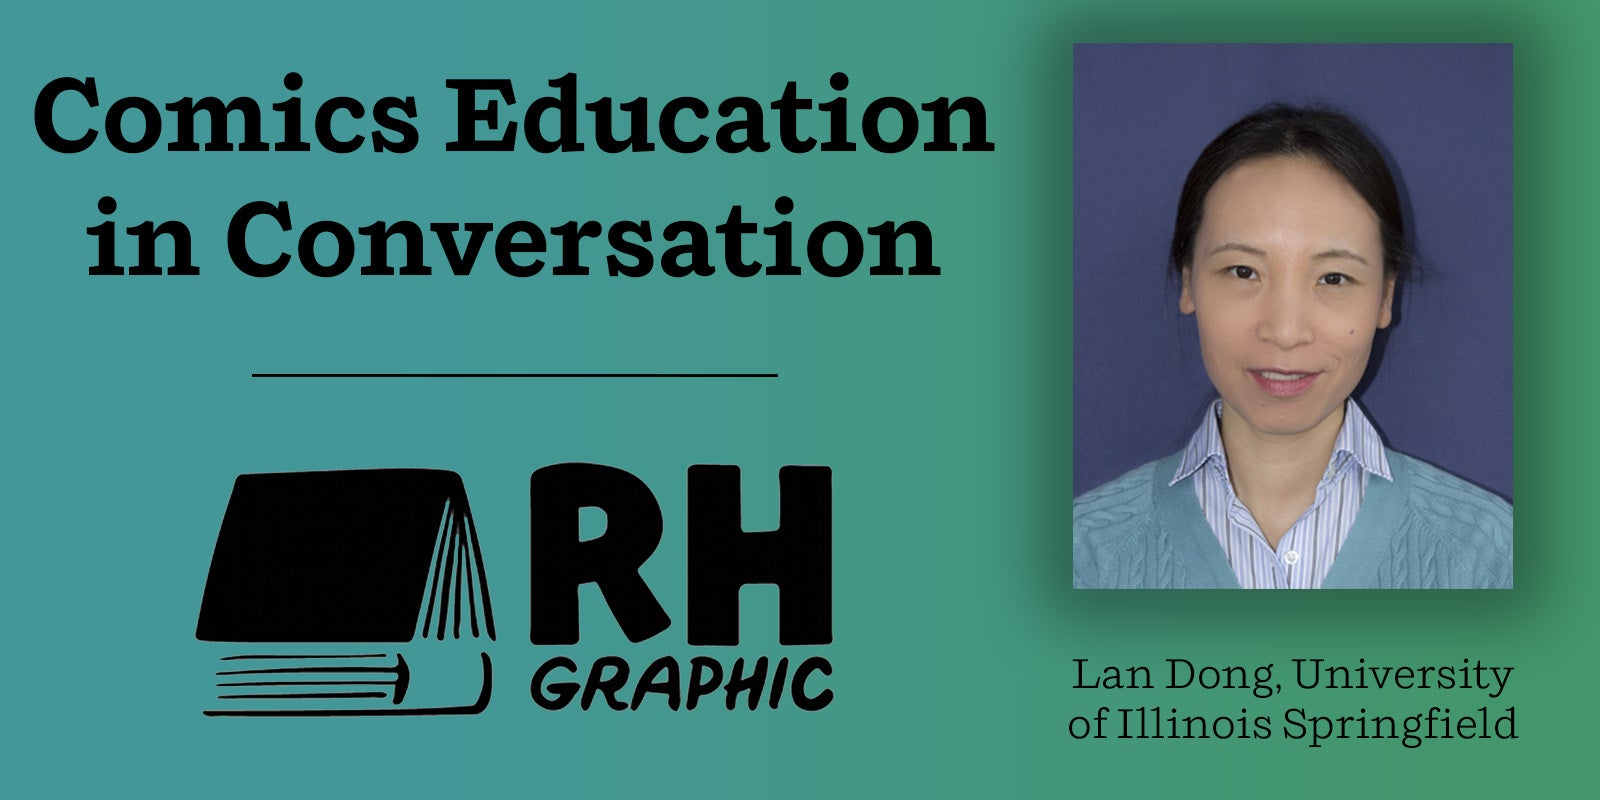 Comics Education in Conversation: Lan Dong